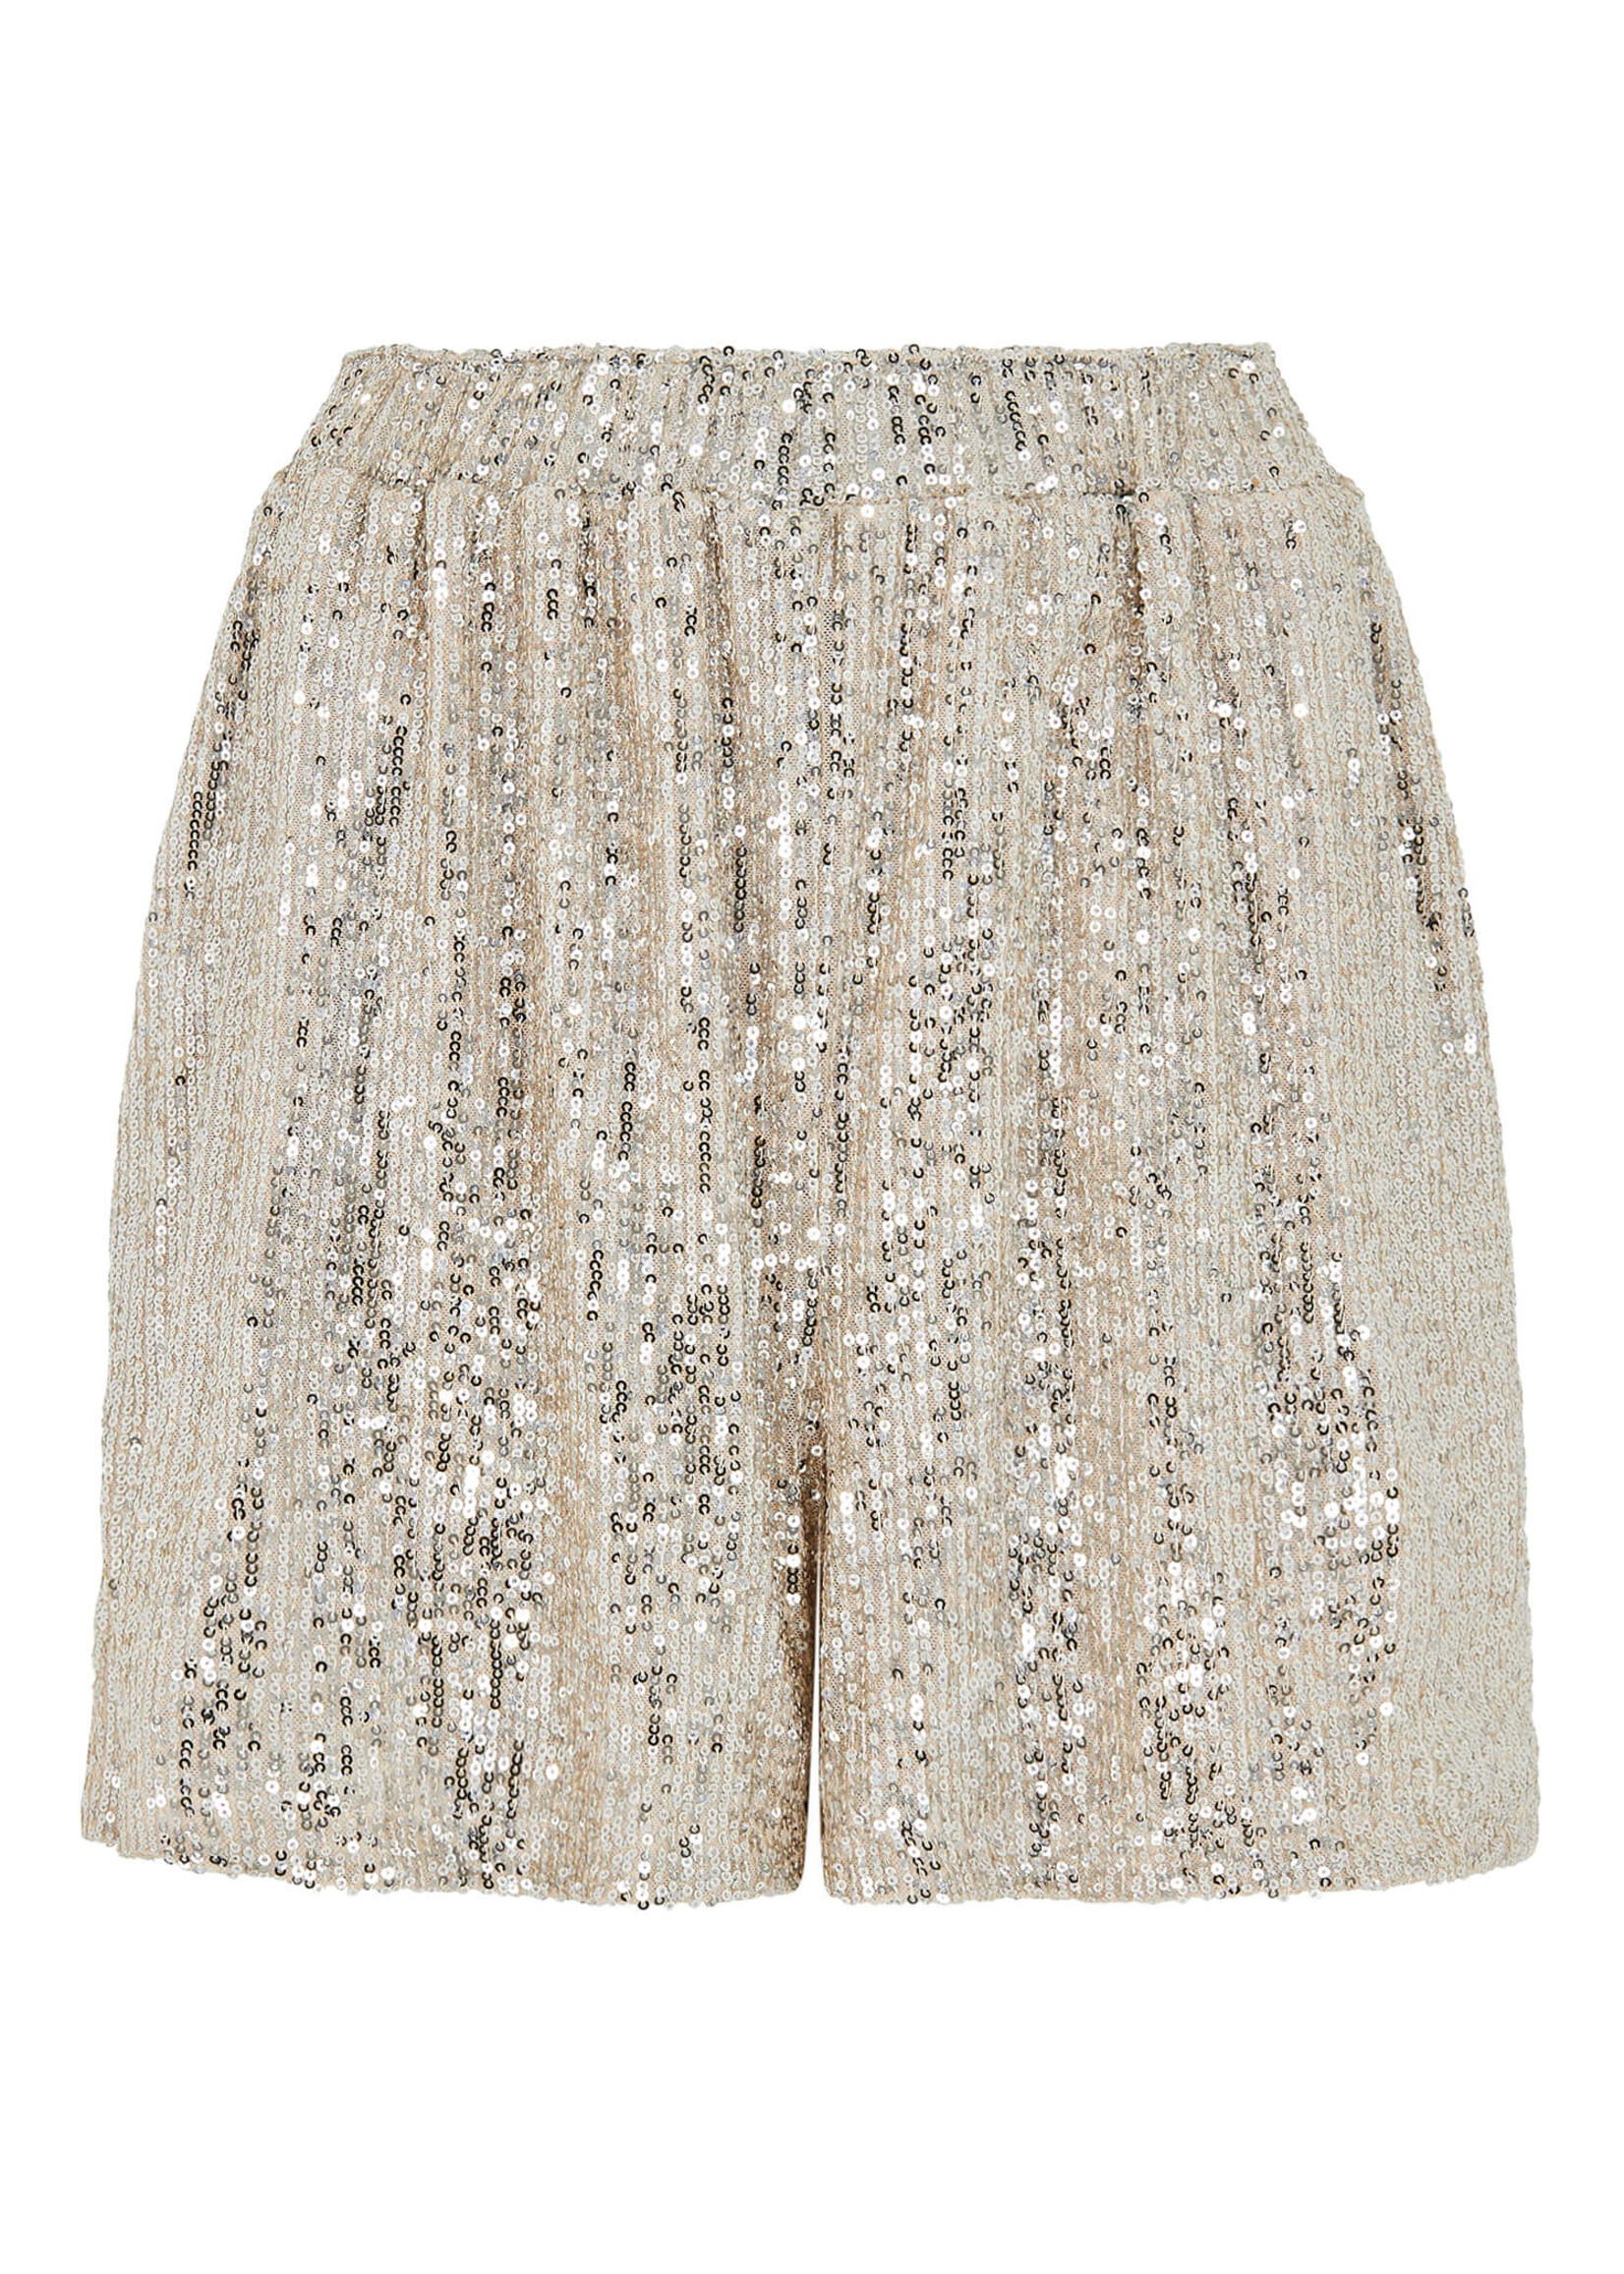 Sequin Pullon Shorts Champagne